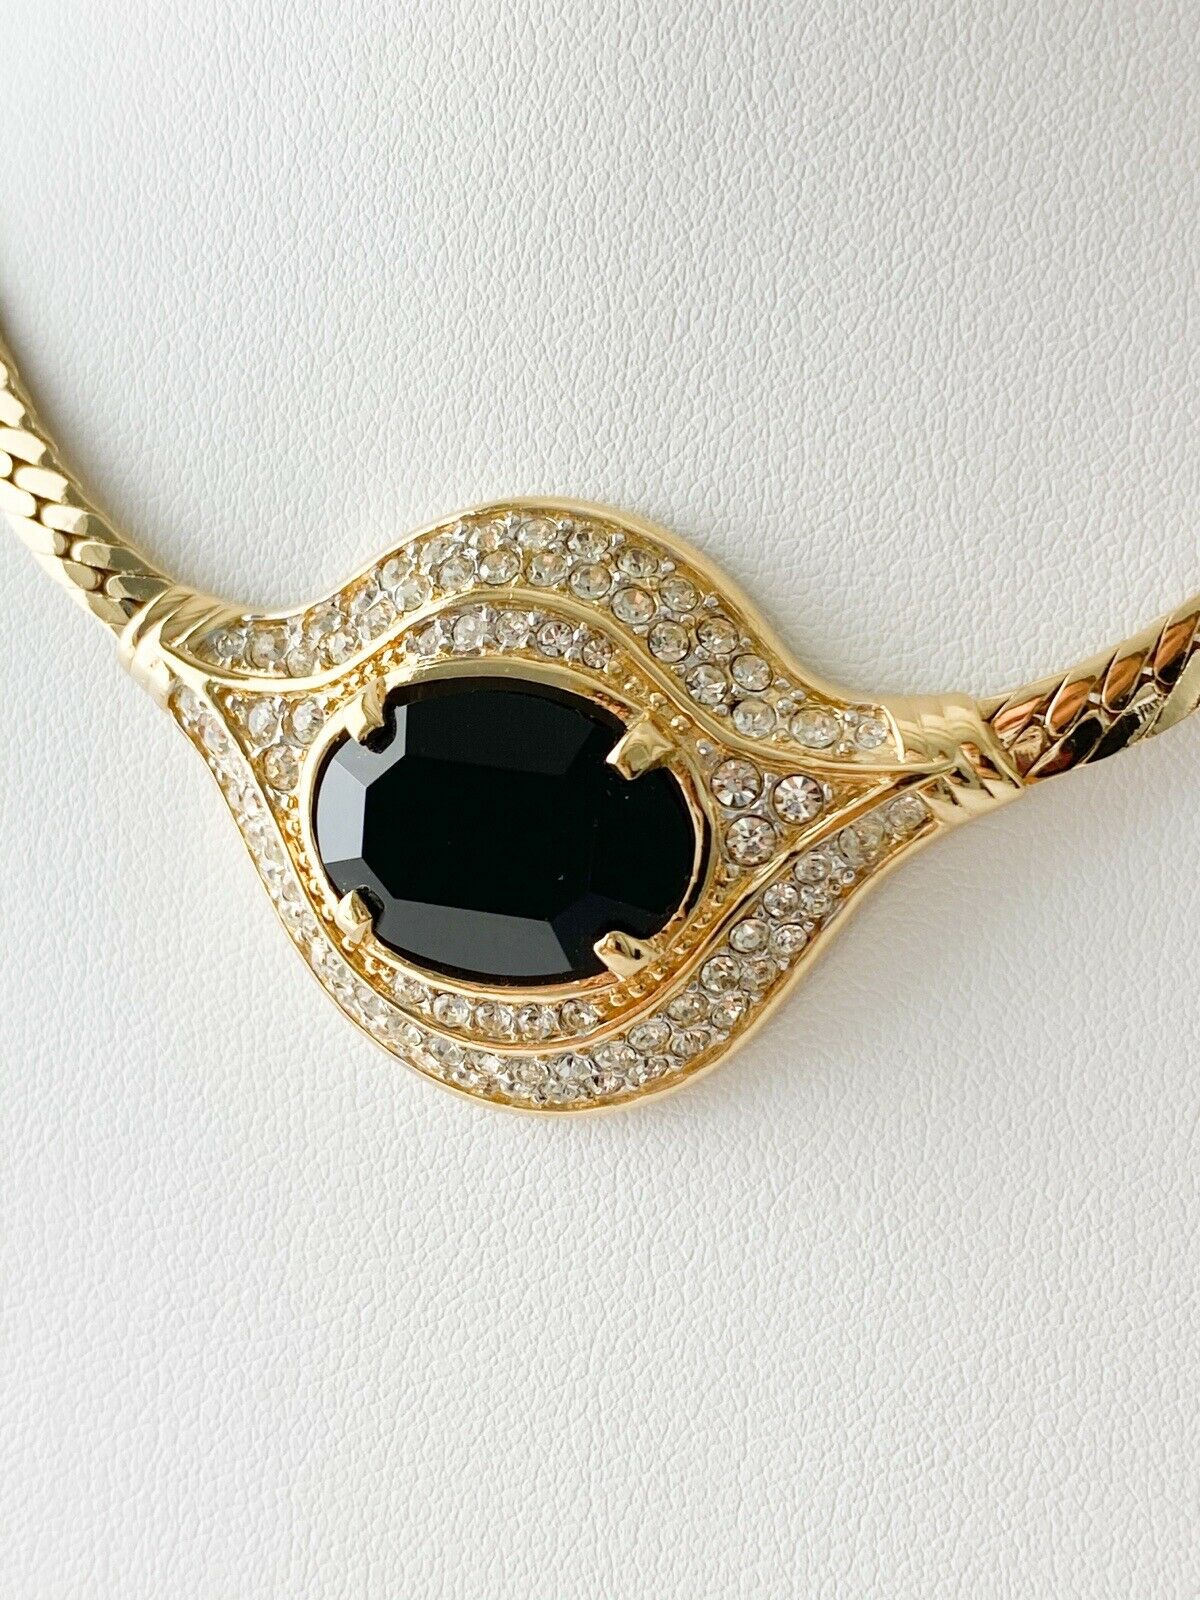 Nina Ricci Gold Tone Choker Necklace Black Stone Rhinestone Vintage